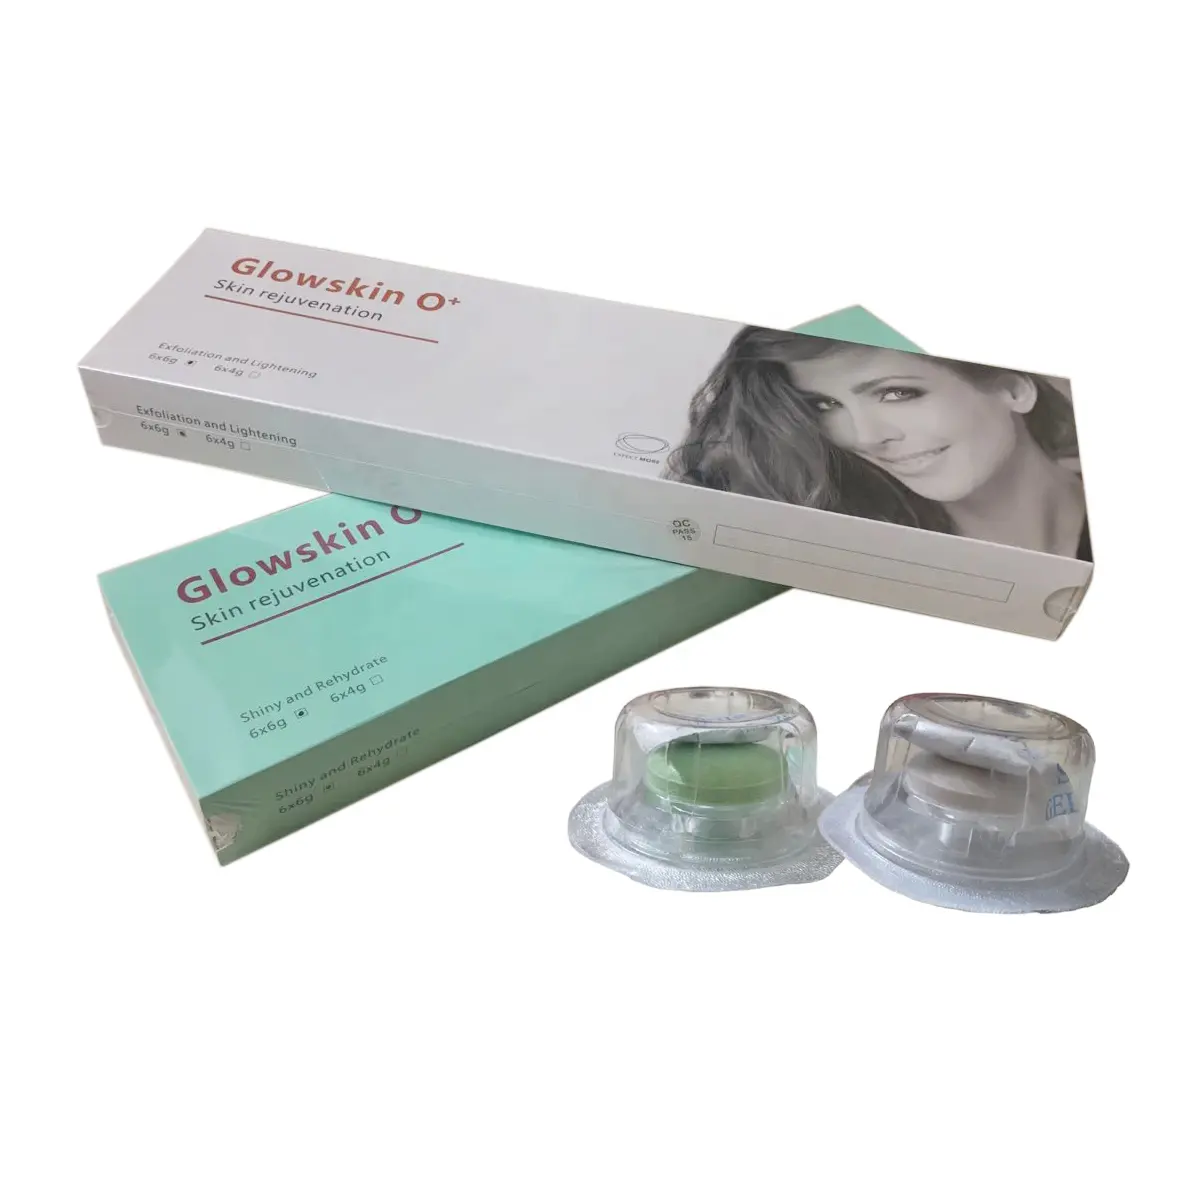 Glowskin Capsule Green Kit Skin Rejuvenation Kits Capsules CO2 Tightening Shiny and Exfoliation gel spa Product